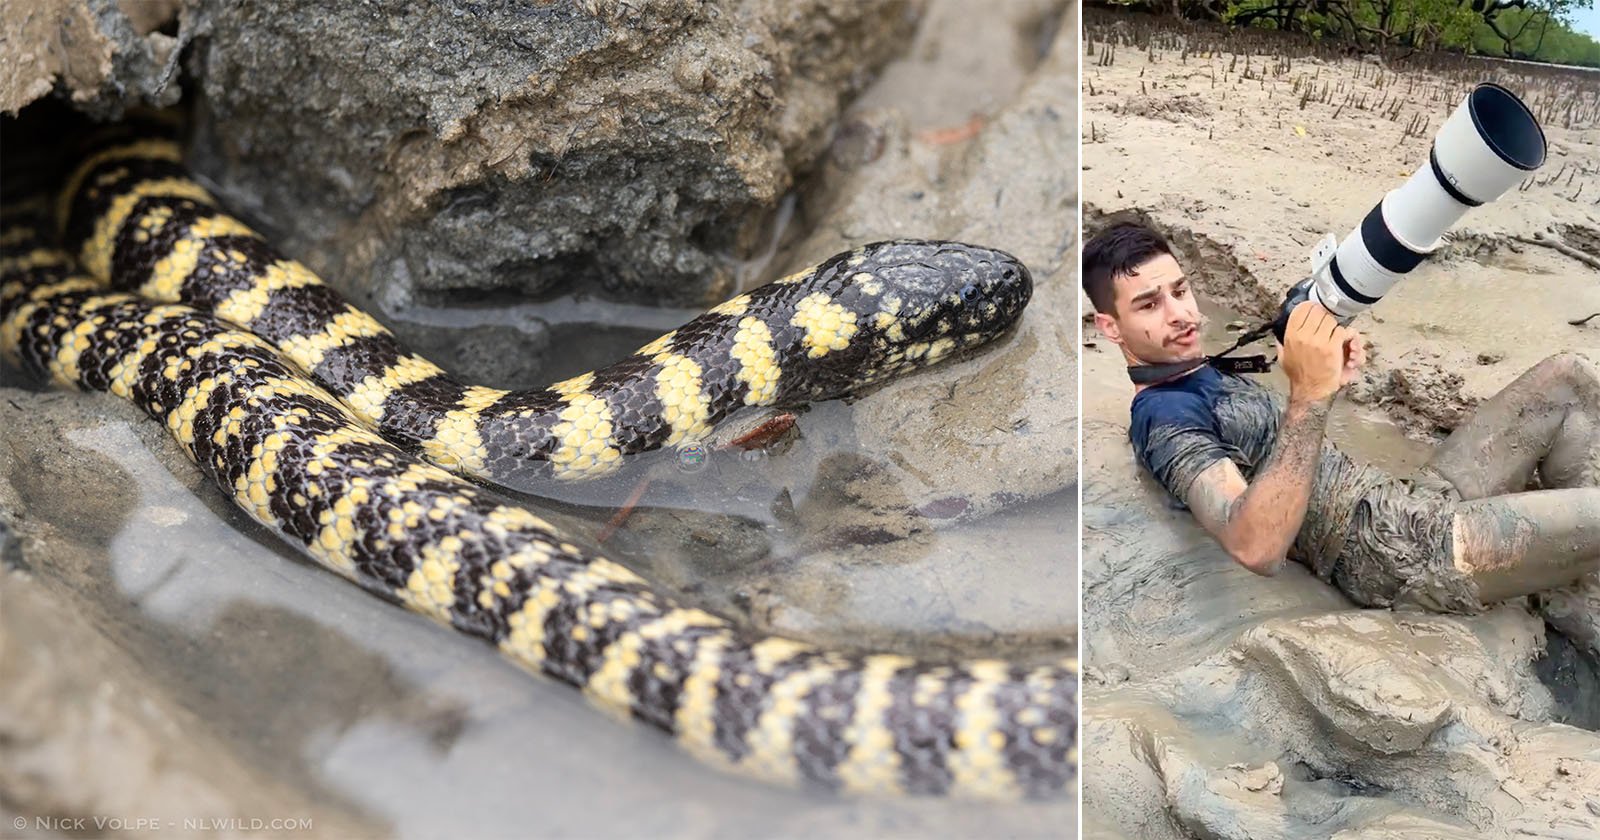 Photographers Brush with Ultra-Venomous Snake Caught on Camera